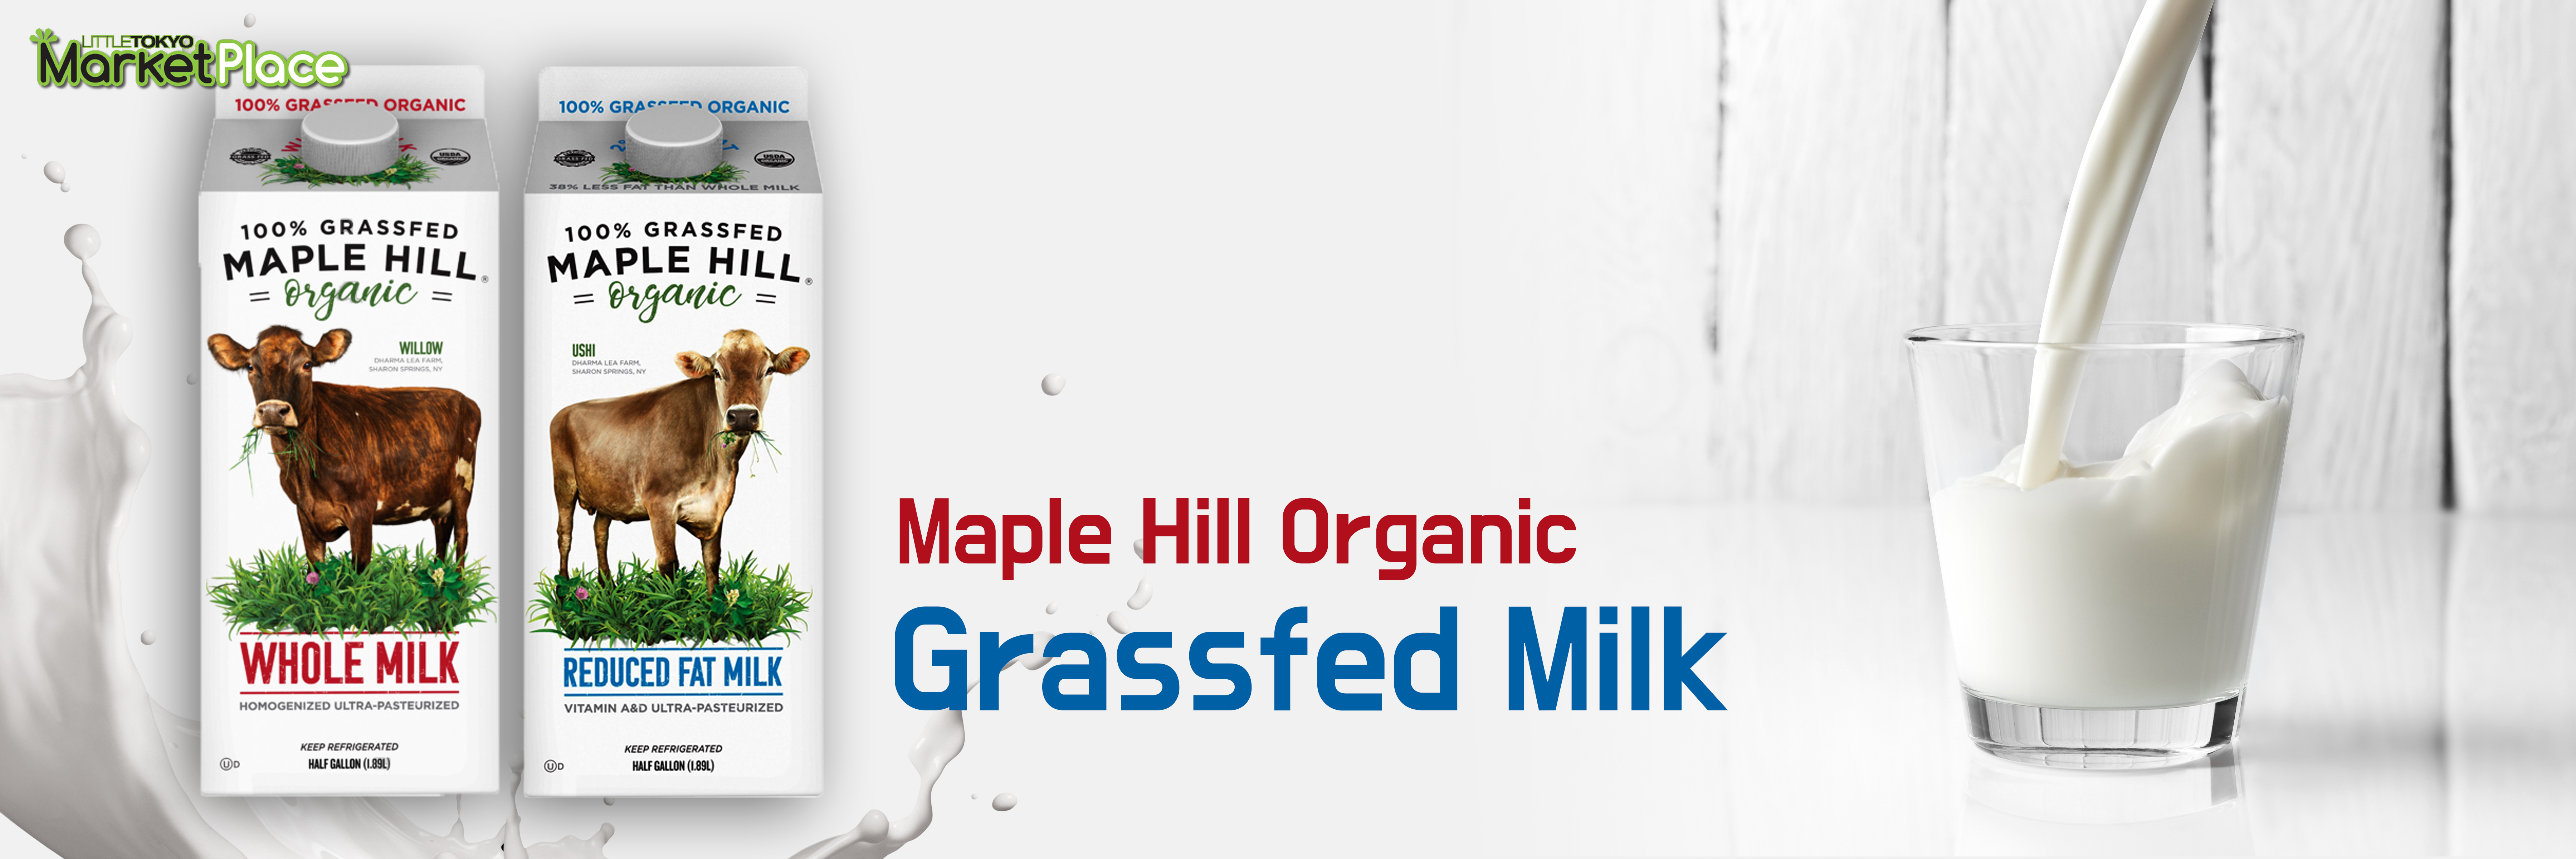 Maple Hill Organic Grassfed Milk r1.jpg